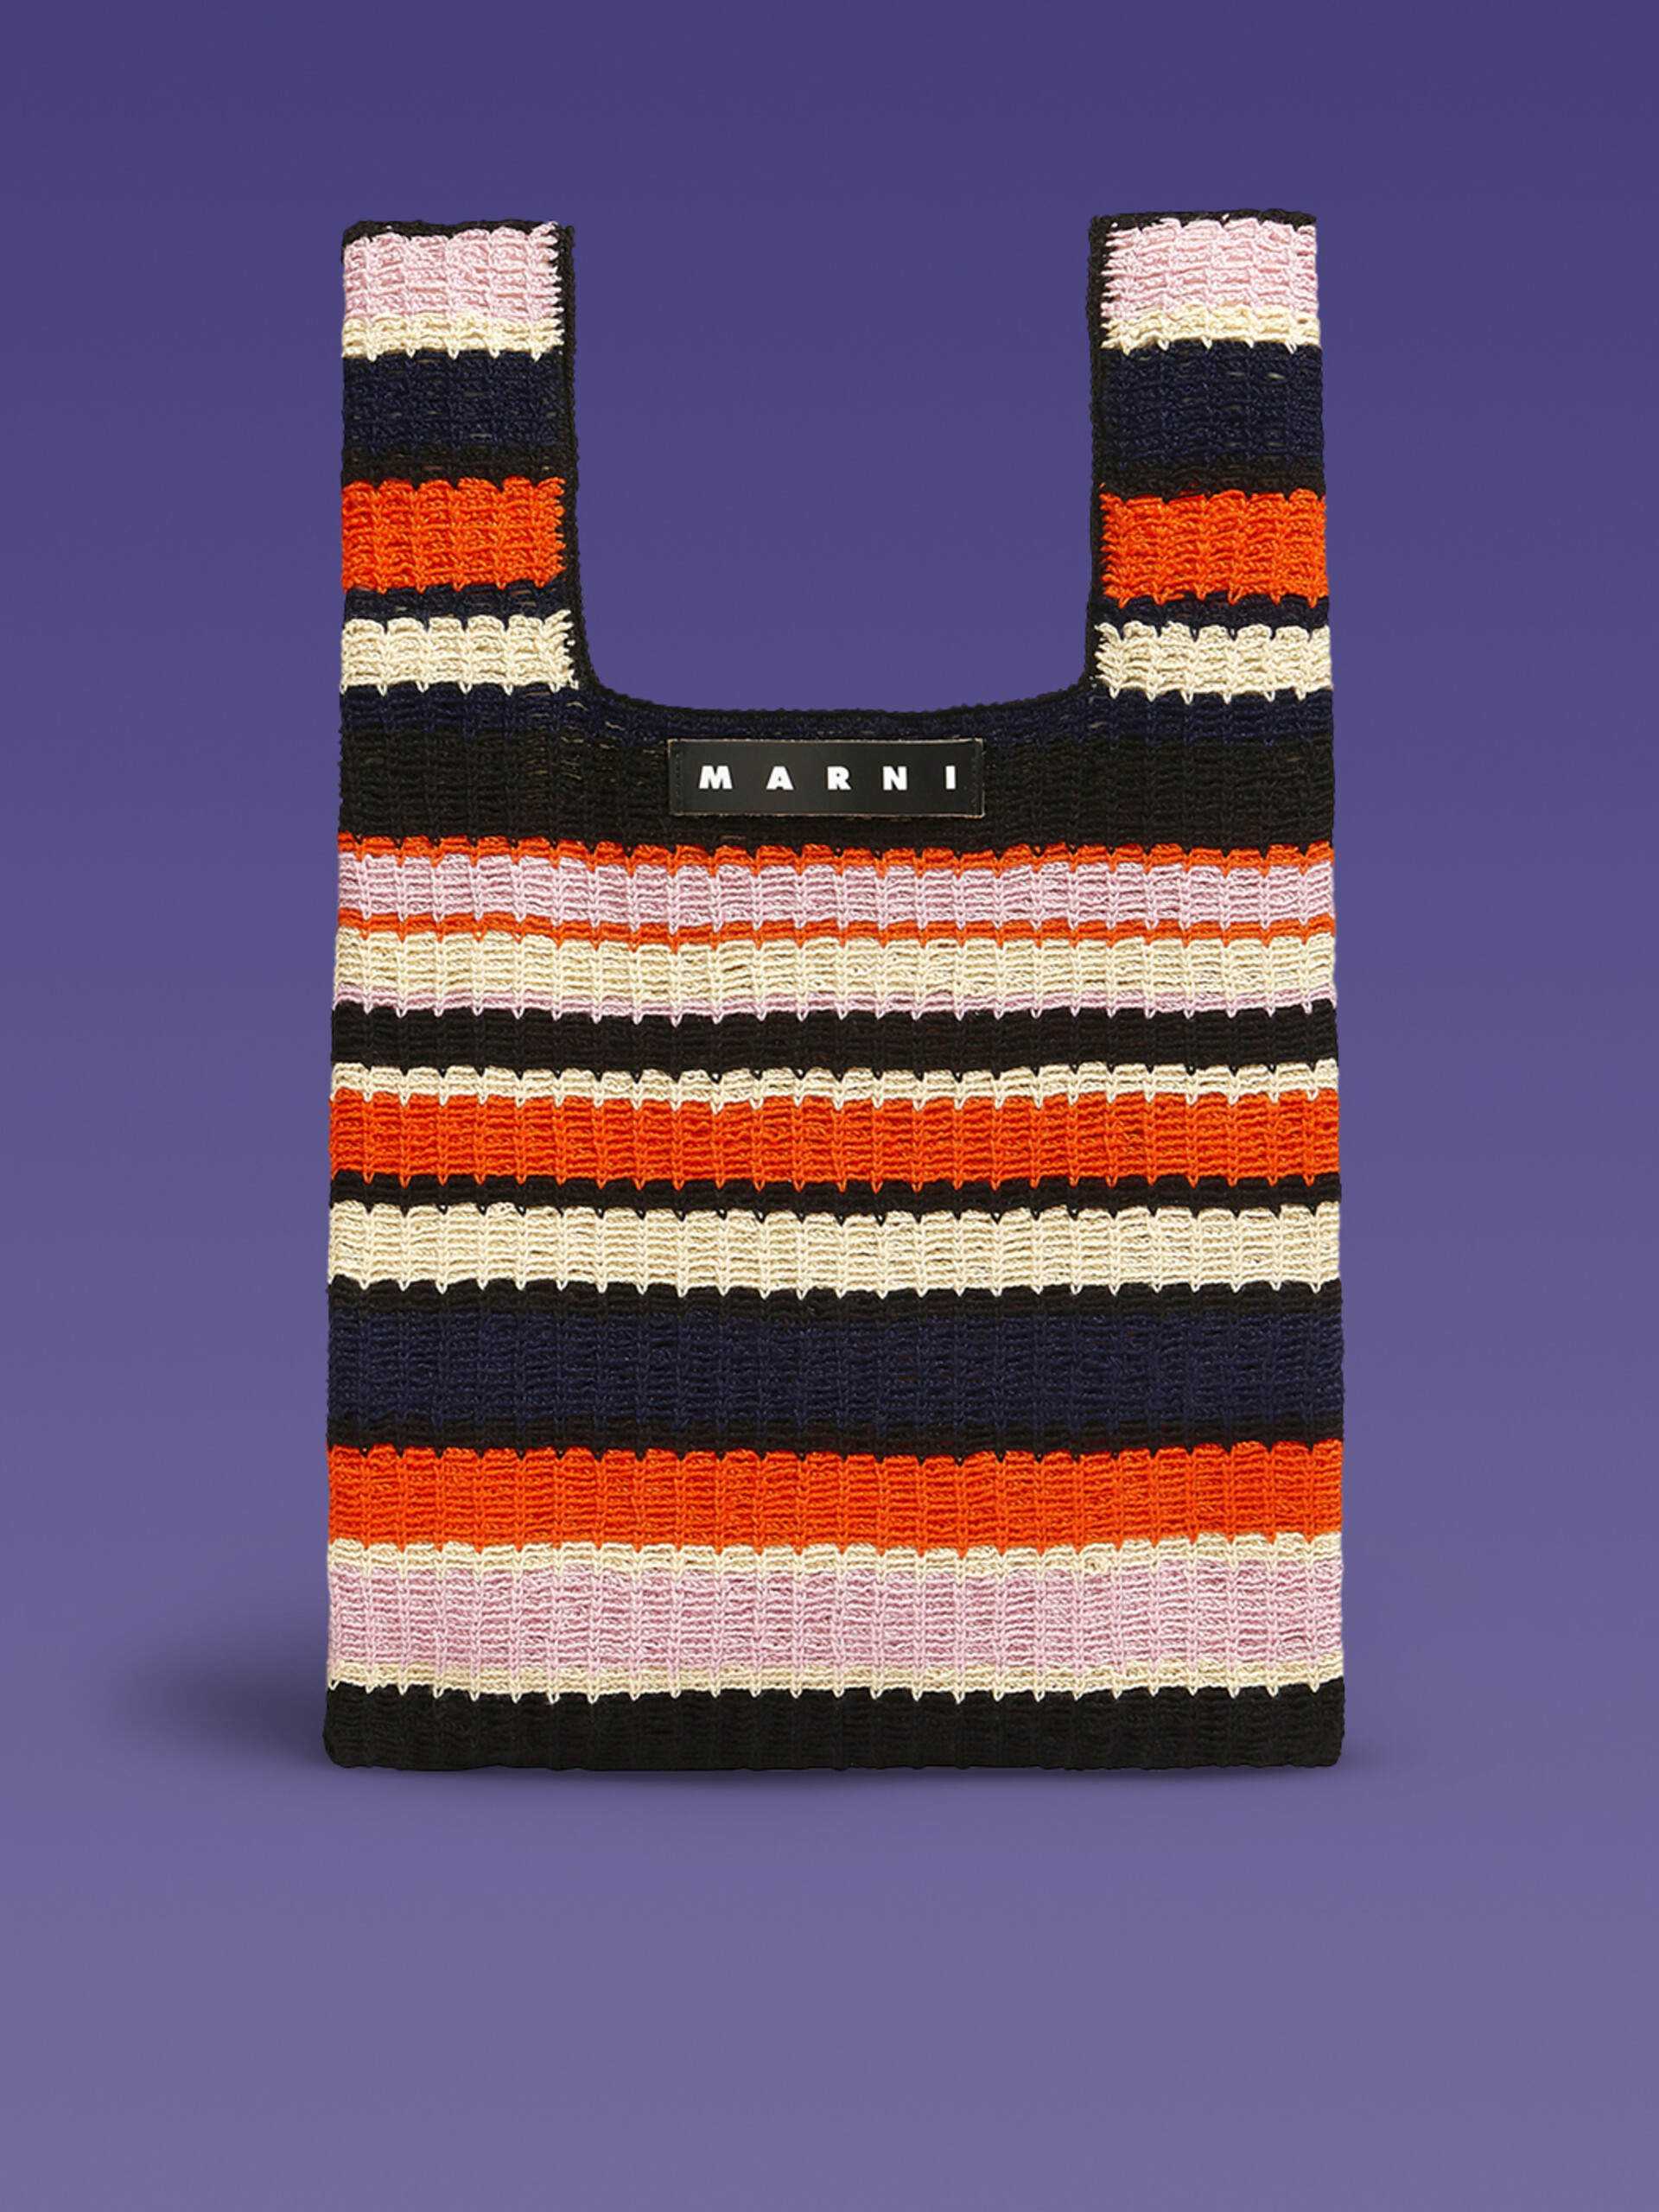 MARNI MARKET FISH bag in multicolor orange crochet - Bags - Image 1